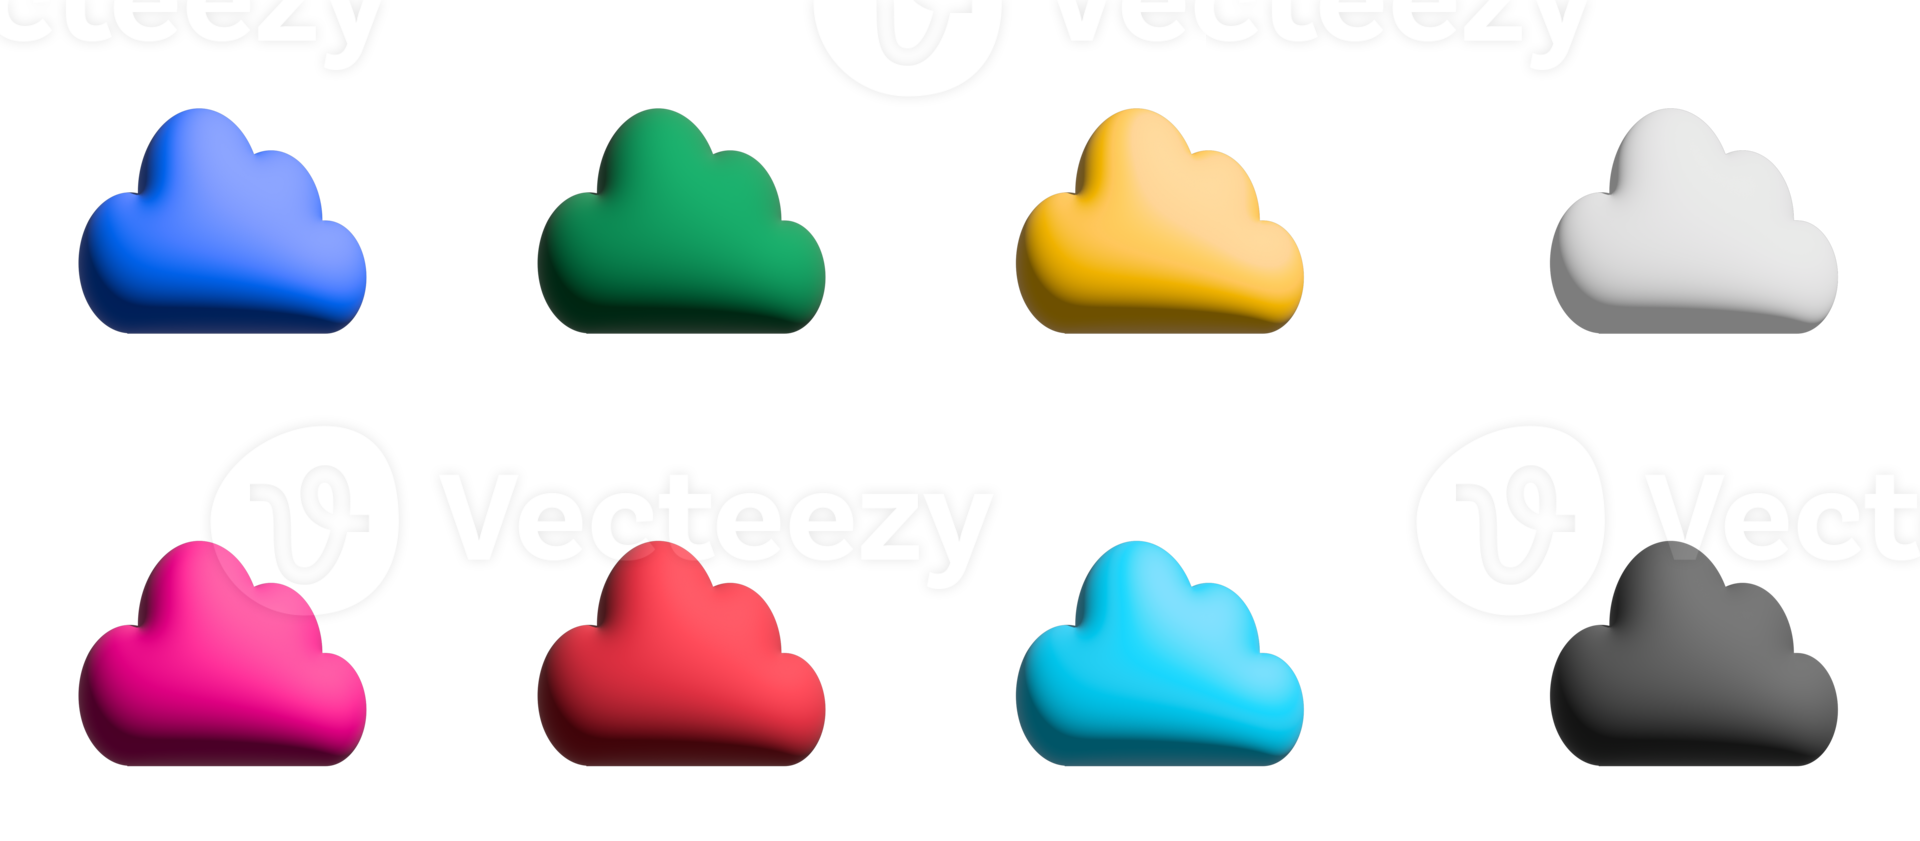 Cloudy 3d icon set, colorful symbols graphic elements png